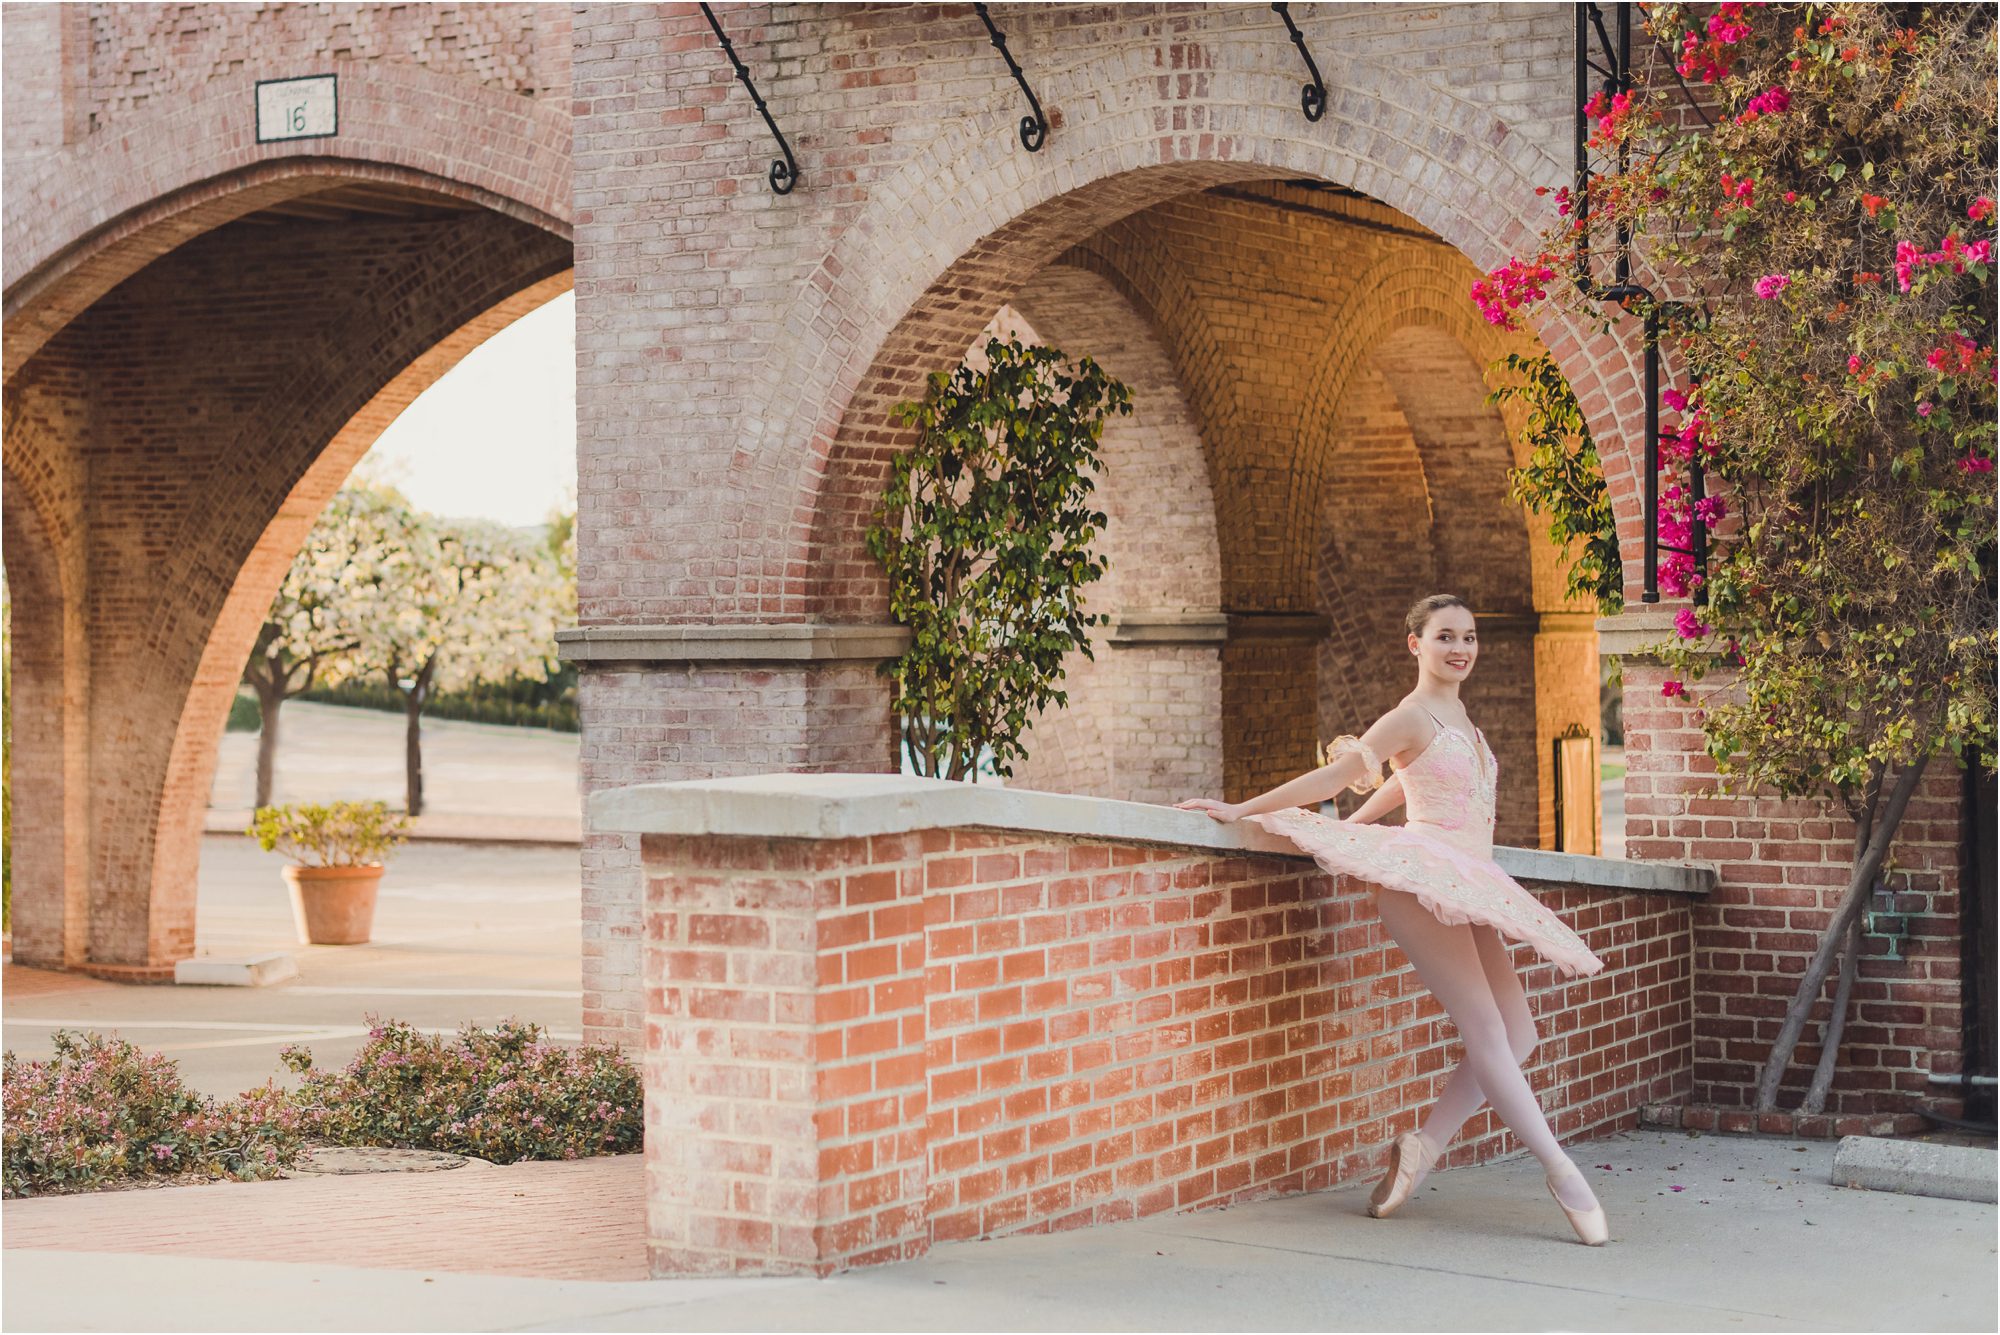 Ballet pictures in Palos Verdes 0001 1